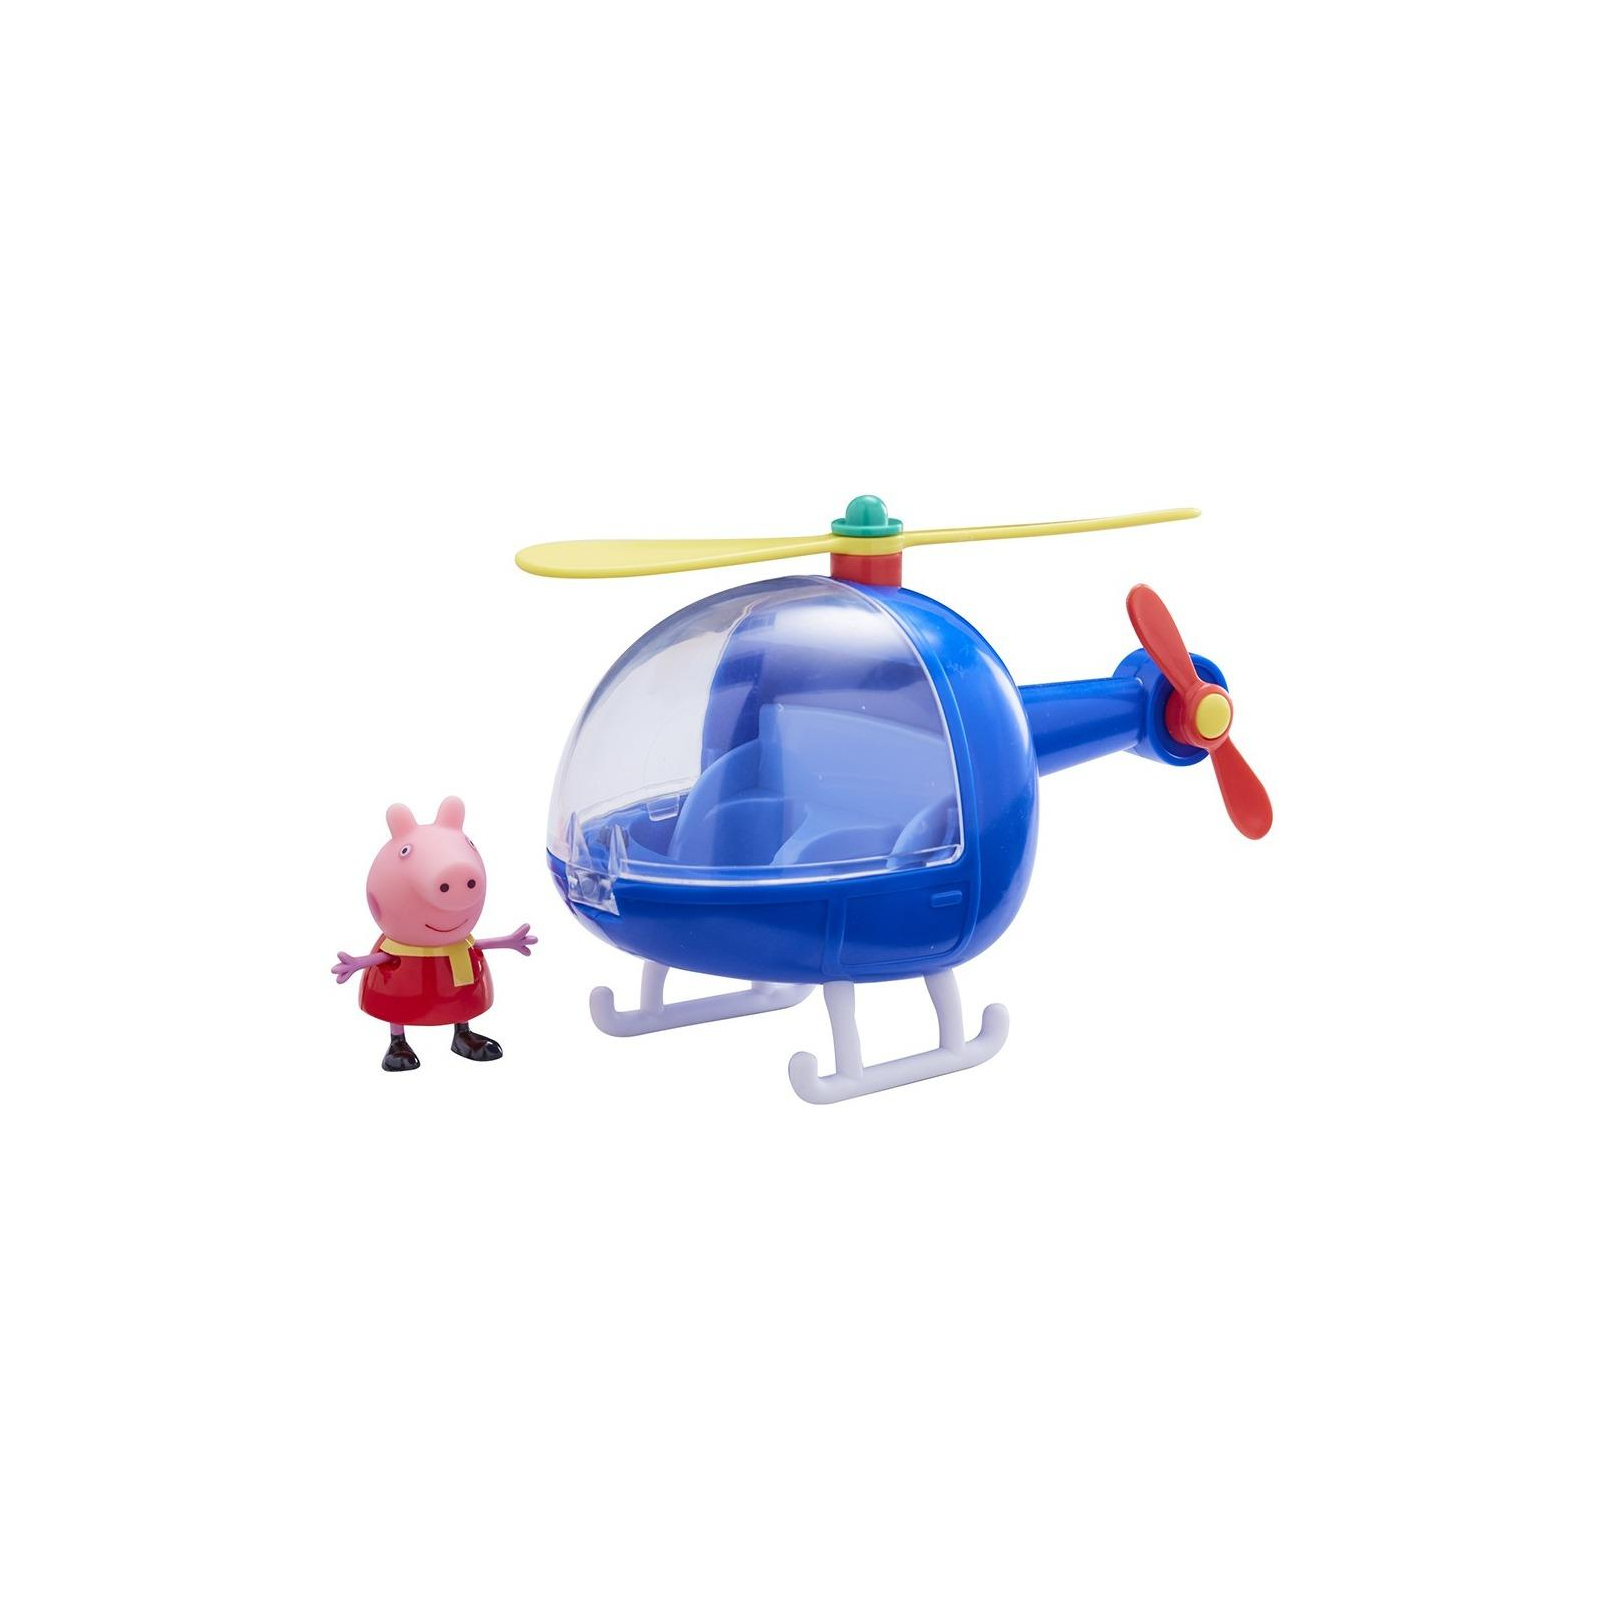 Ігровий набір Peppa Pig ВЕРТОЛЕТ ПЕППЫ (вертолет, фигурка Пеппы) (06388)